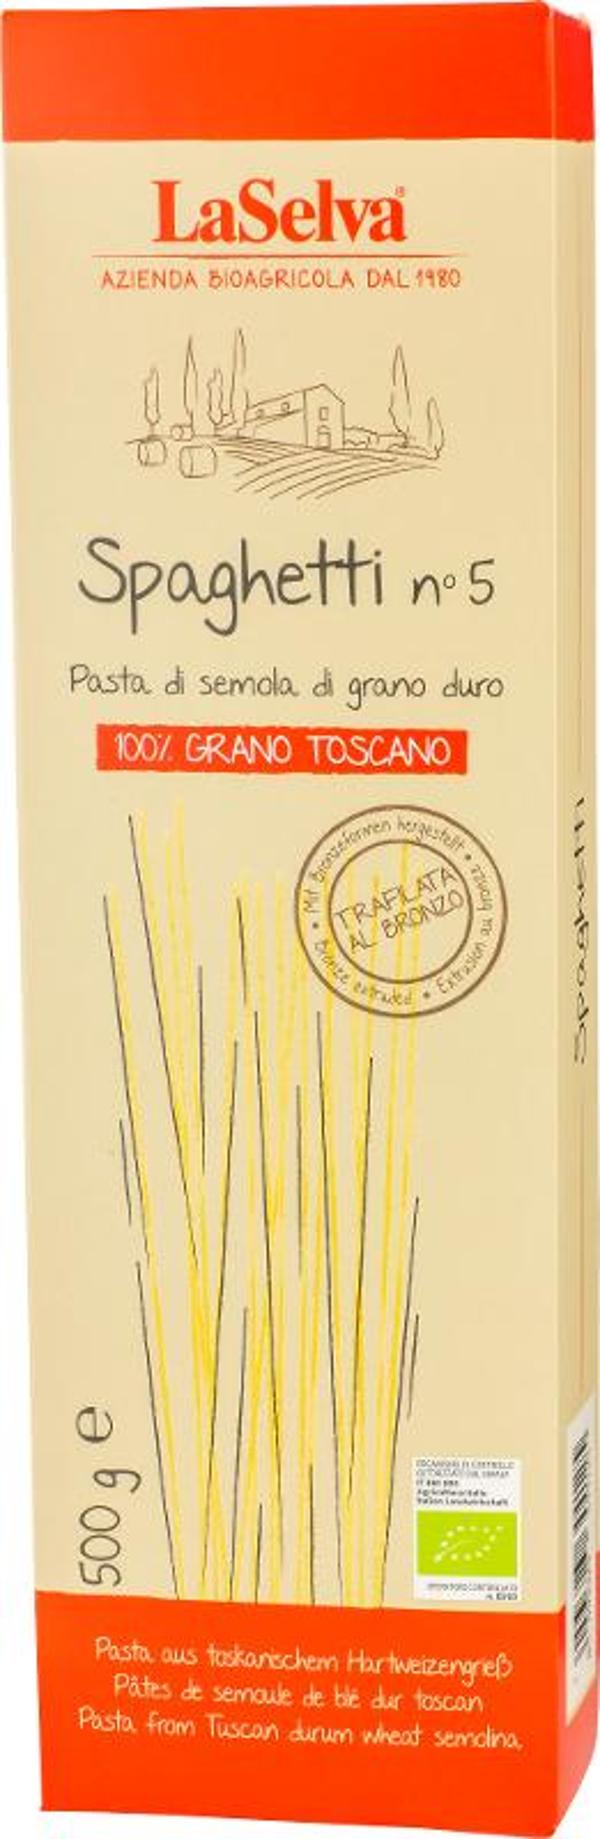 Produktfoto zu Spaghetti Nr. 5 Pasta Toscana 500g LaSelva